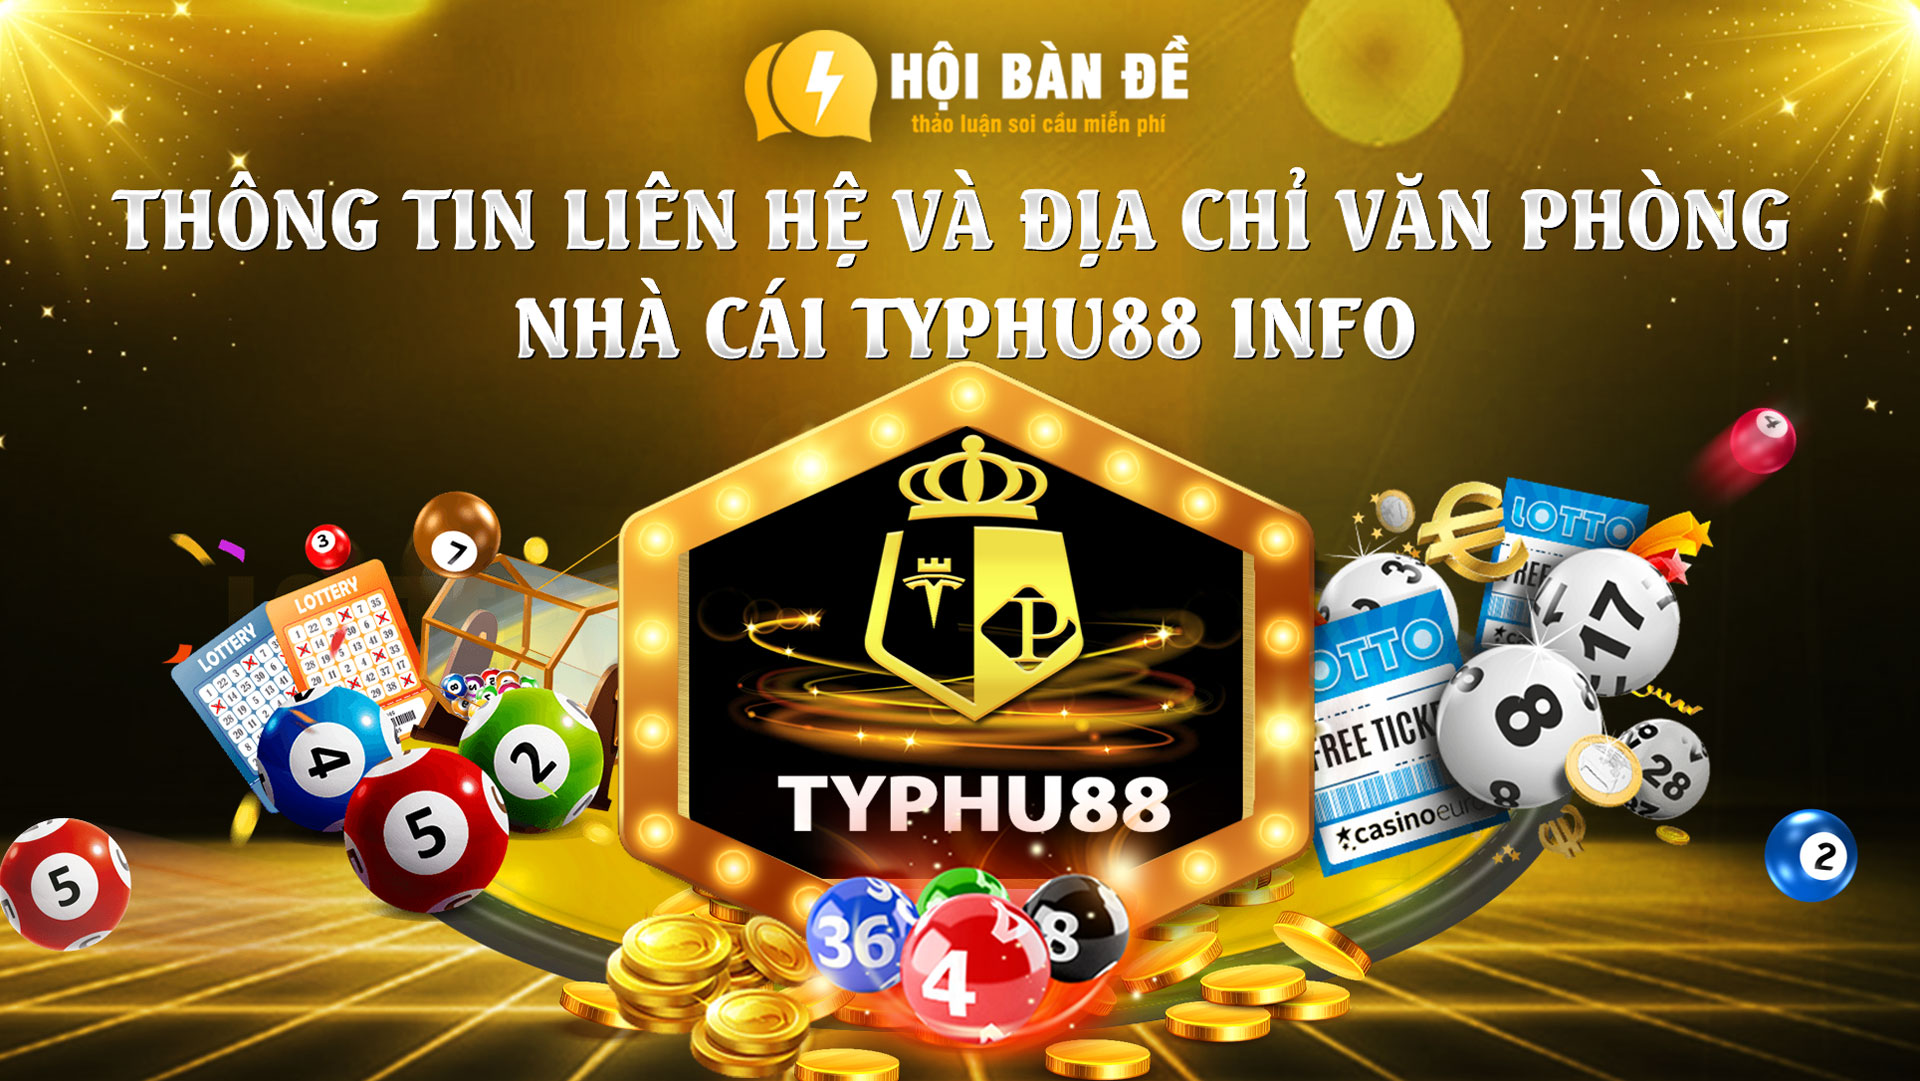 Thong Tin Lien He Va Dia Chi Van Phong Nha Cai Typhu88 Info